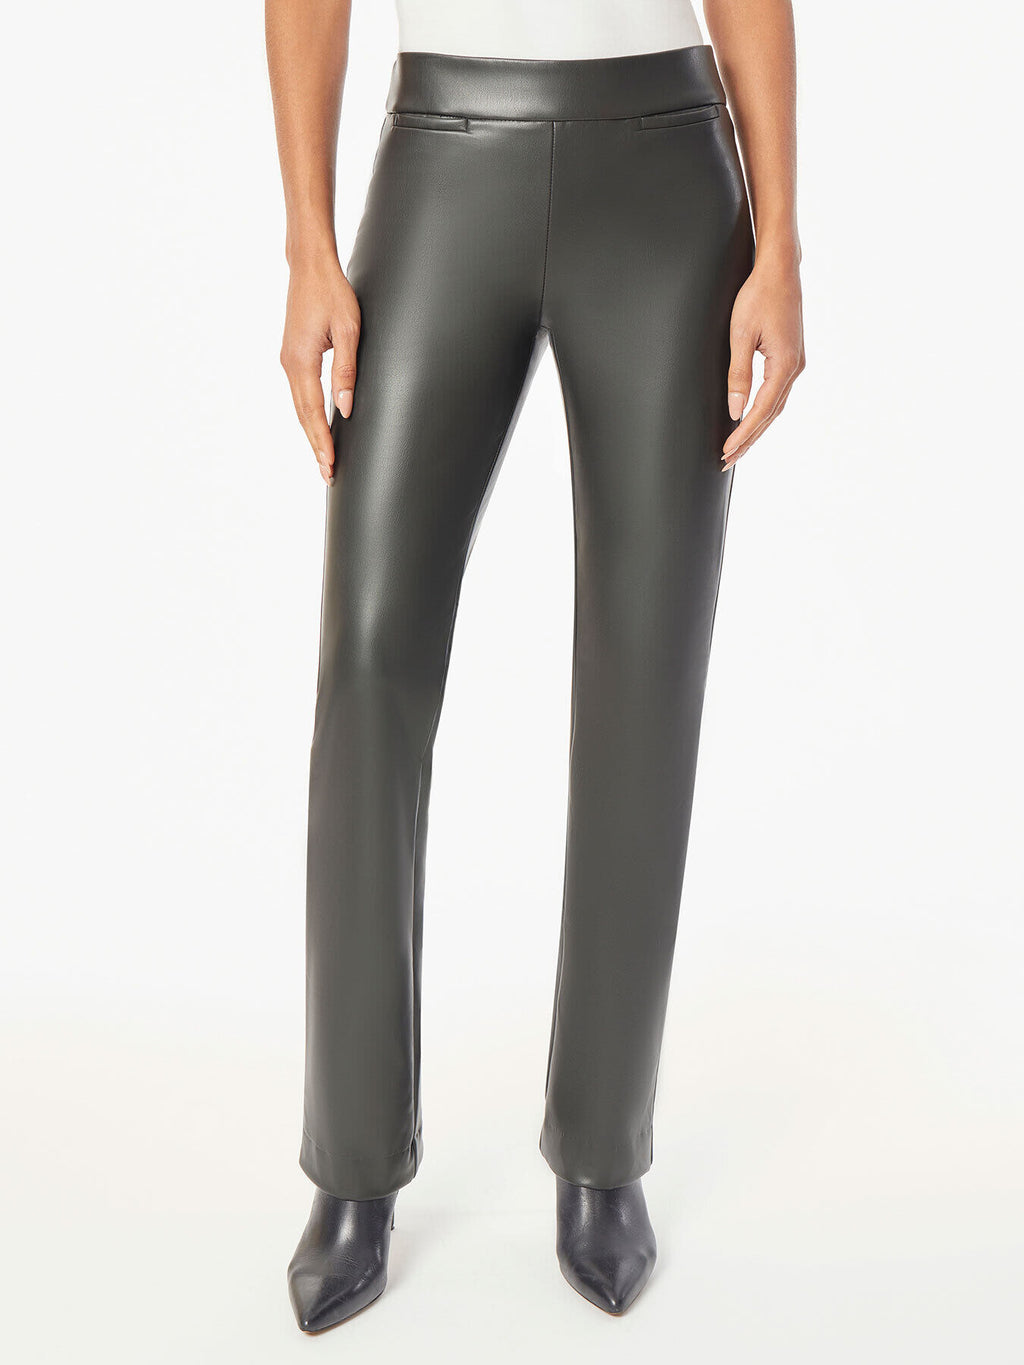 Women's Jones New York Sport 100% Black Leather Pants Size 12P Back Pockets